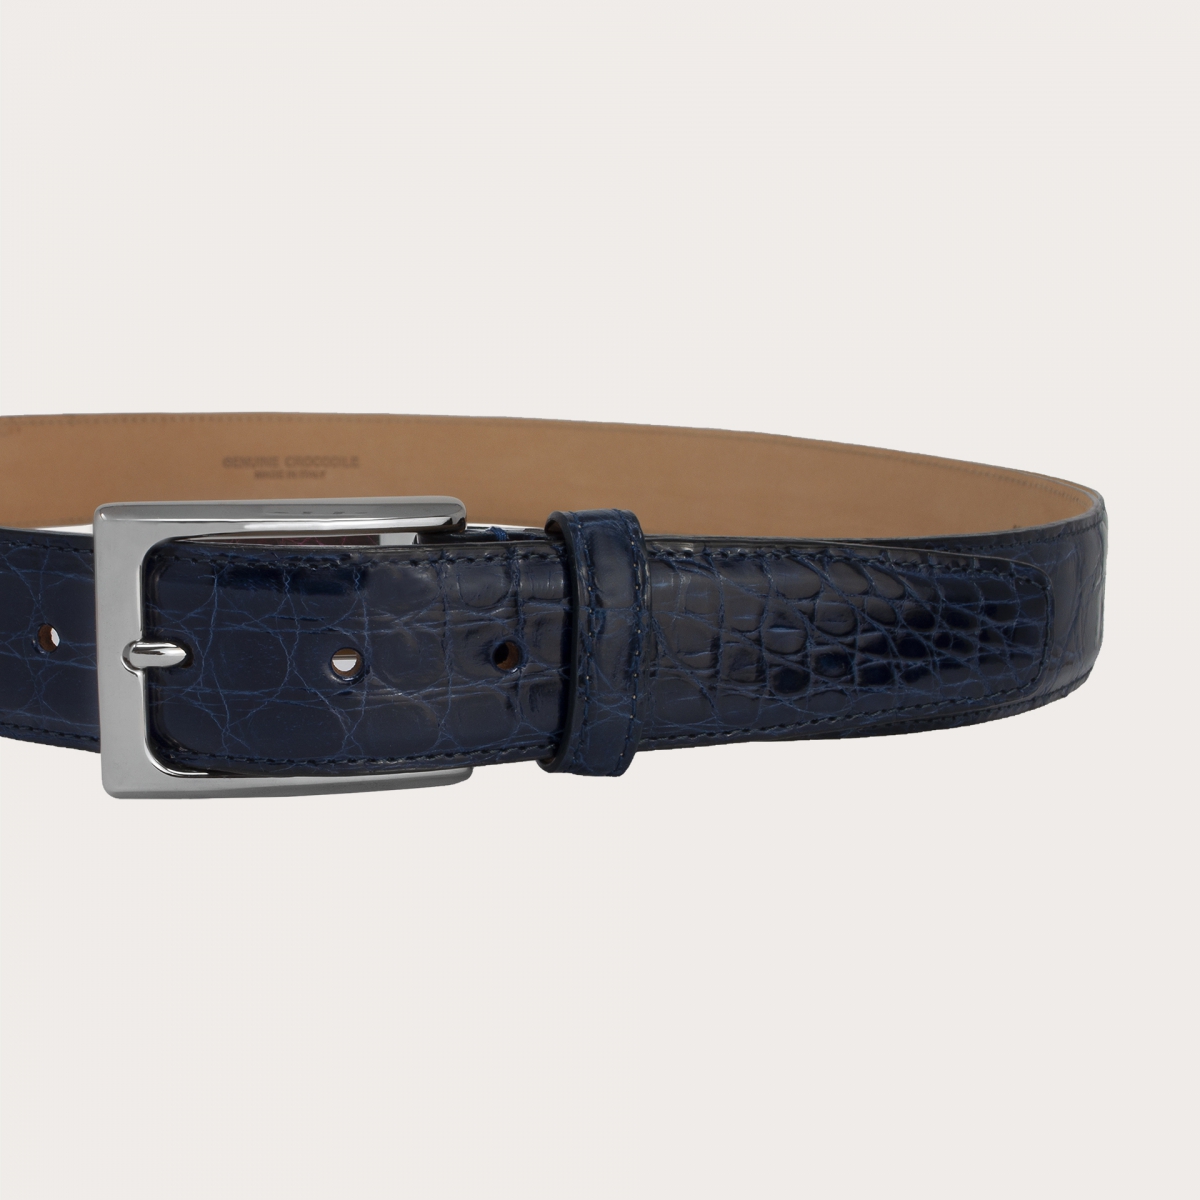 BRUCLE Genuine dark blue crocodile flank leather belt